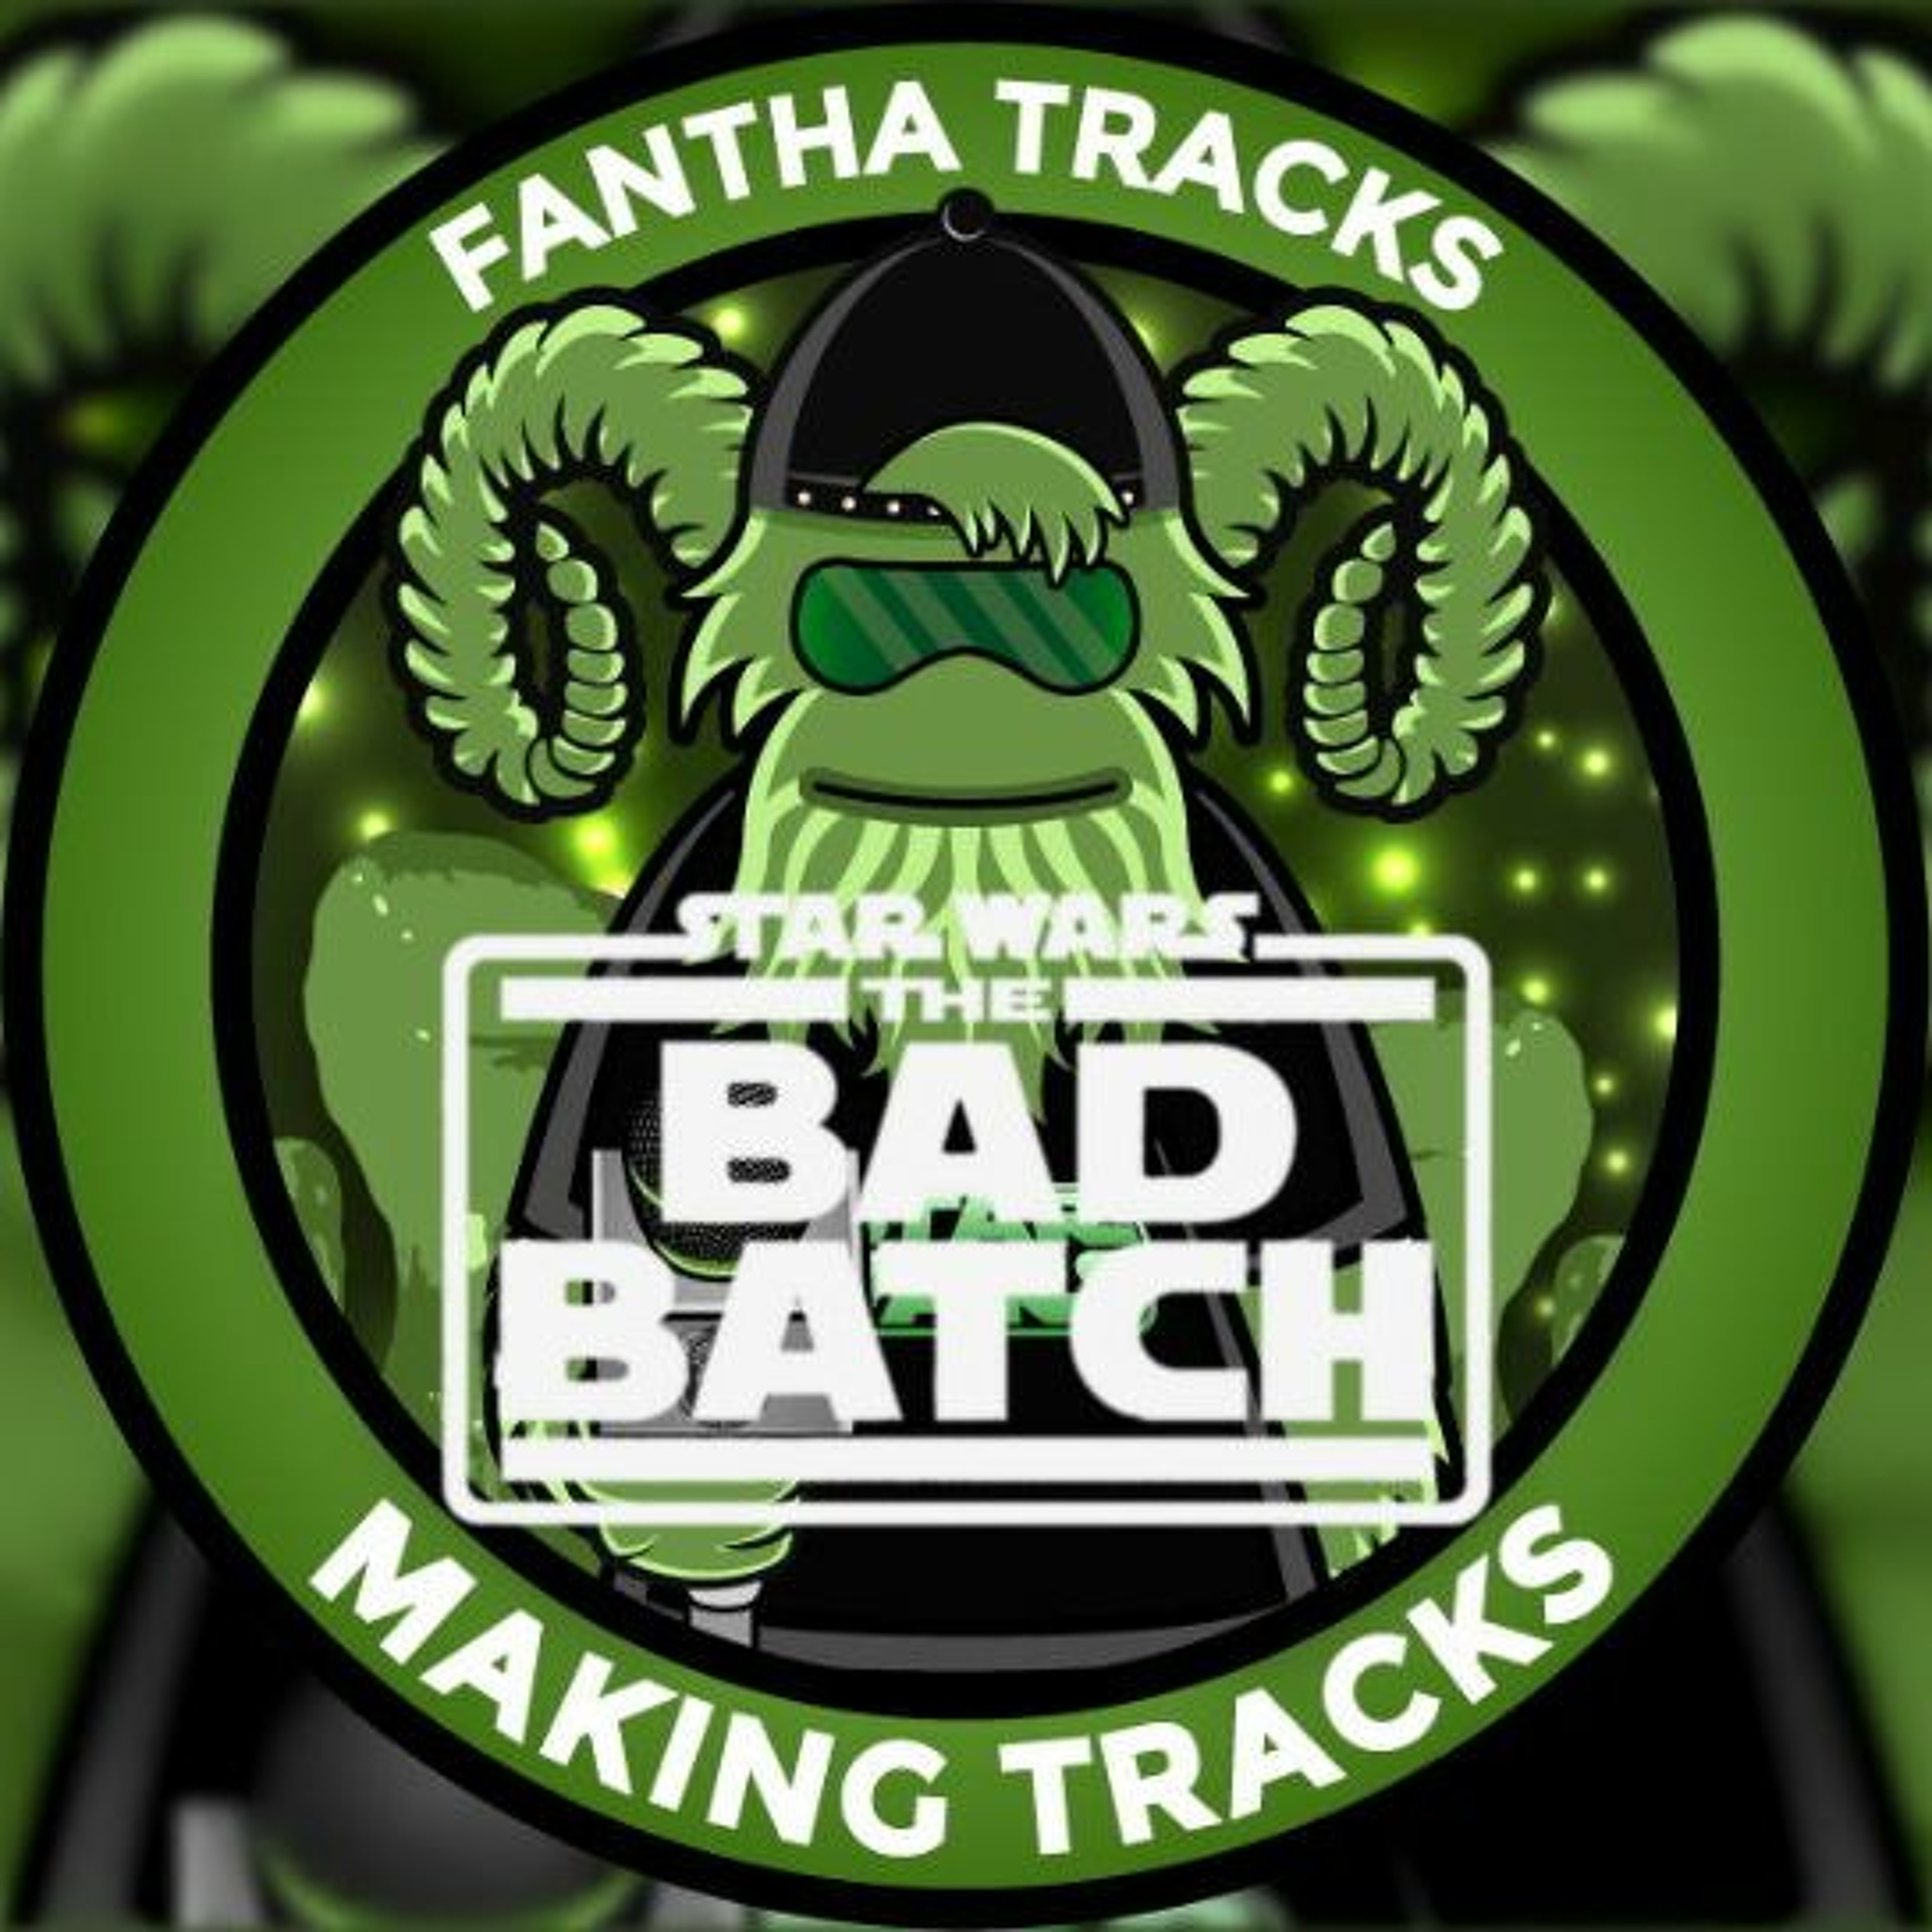 Making Tracks: The Bad Batch Season 3 Roundtable: With Dee Bradley Baker